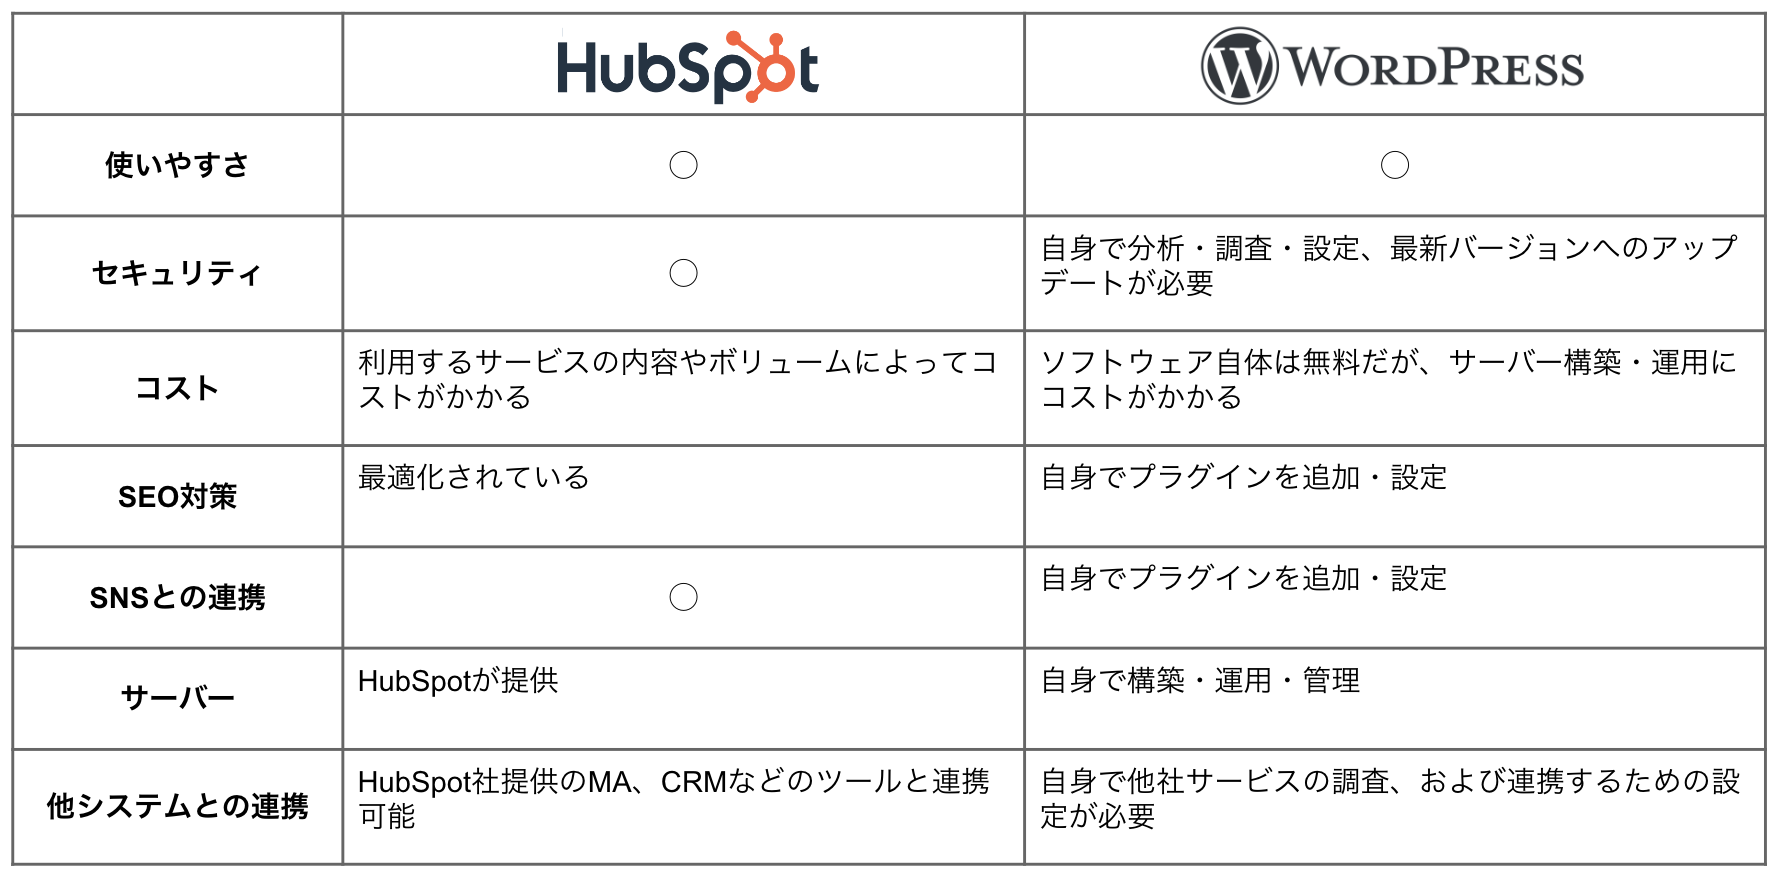 HubSpot WordPress比較表